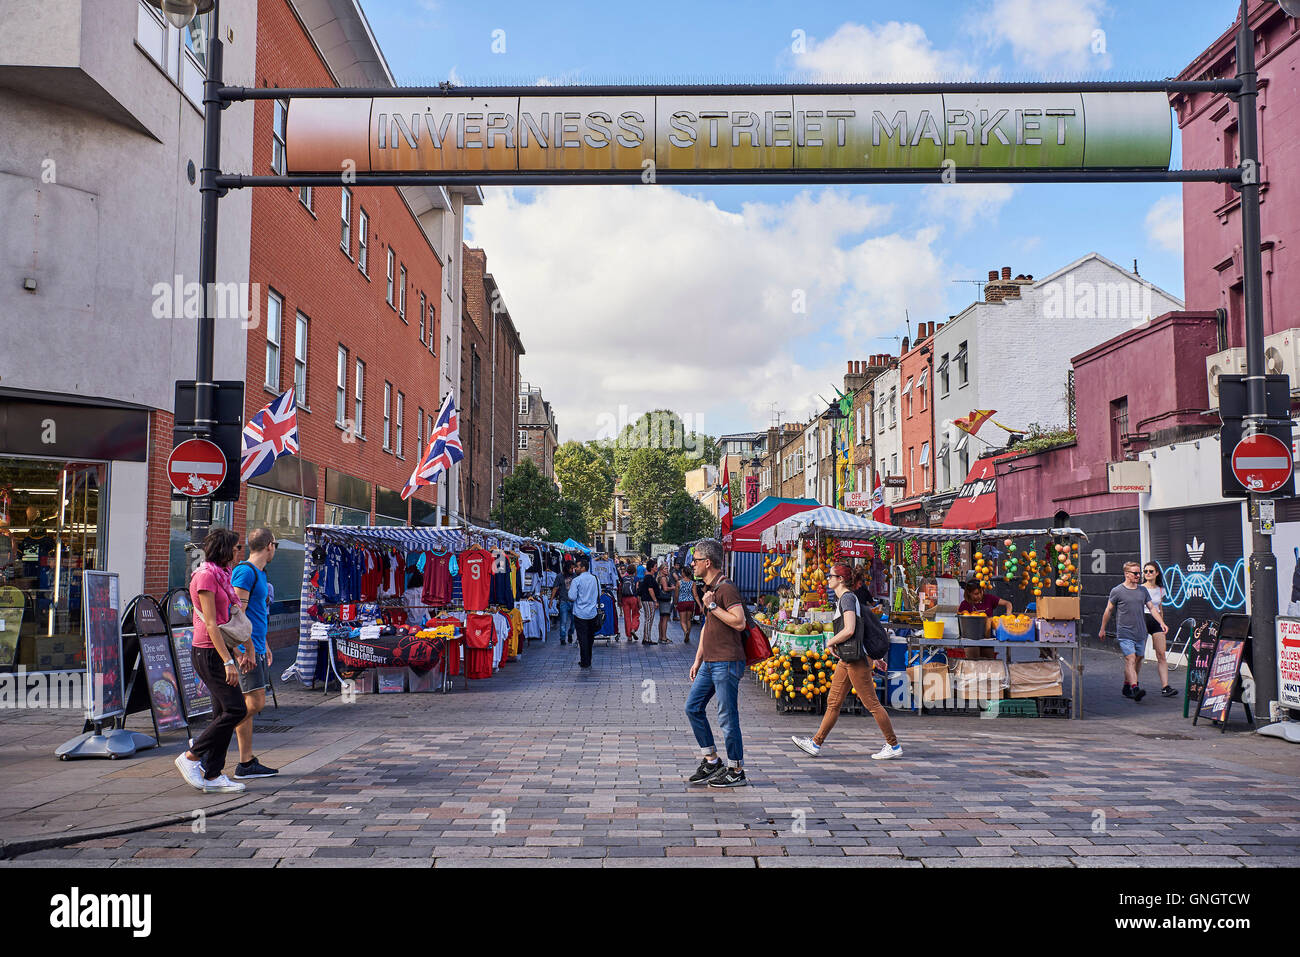 Inverness Street Market, Camden, London, UK Stockfoto